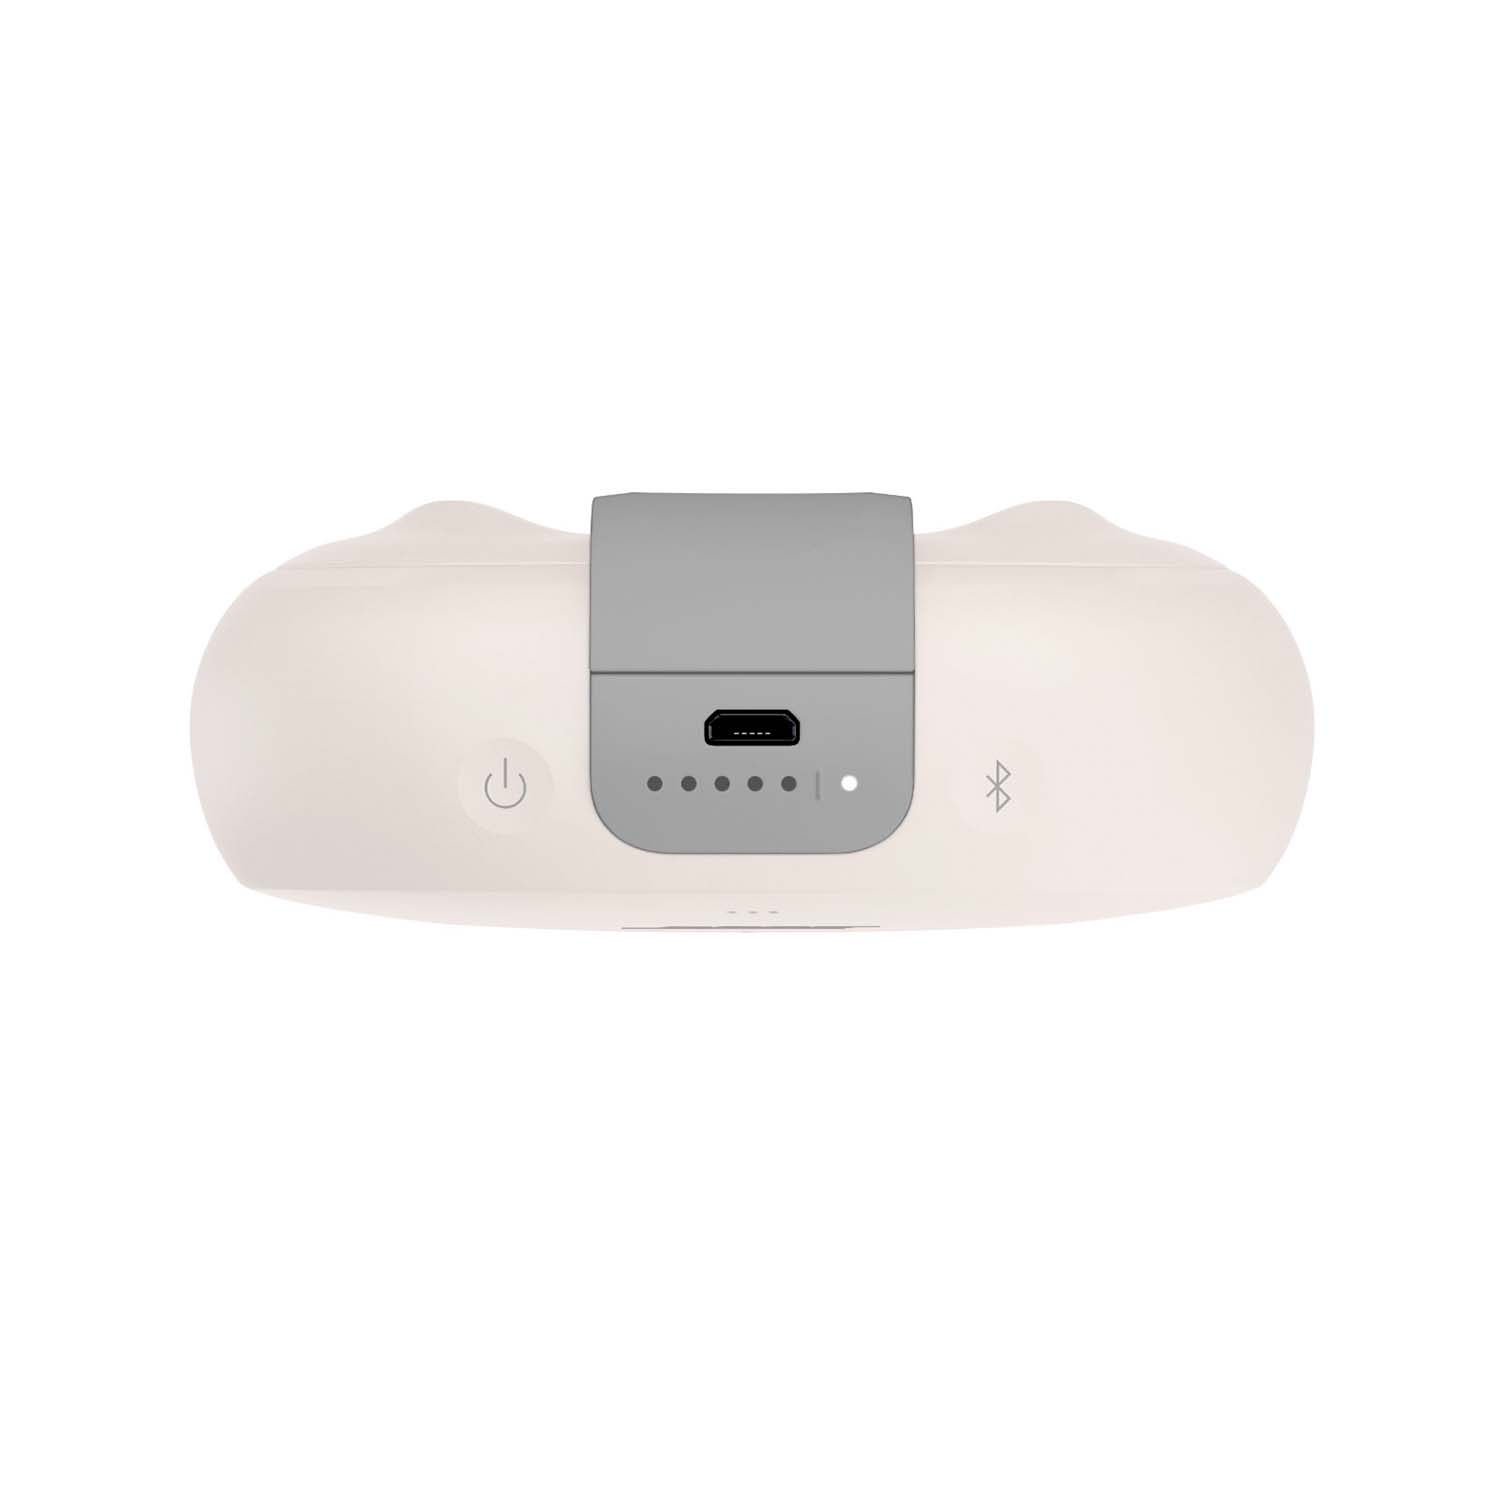 Bose SoundLink Micro Waterproof Wireless Bluetooth Portable Speaker, White Smoke - image 3 of 11